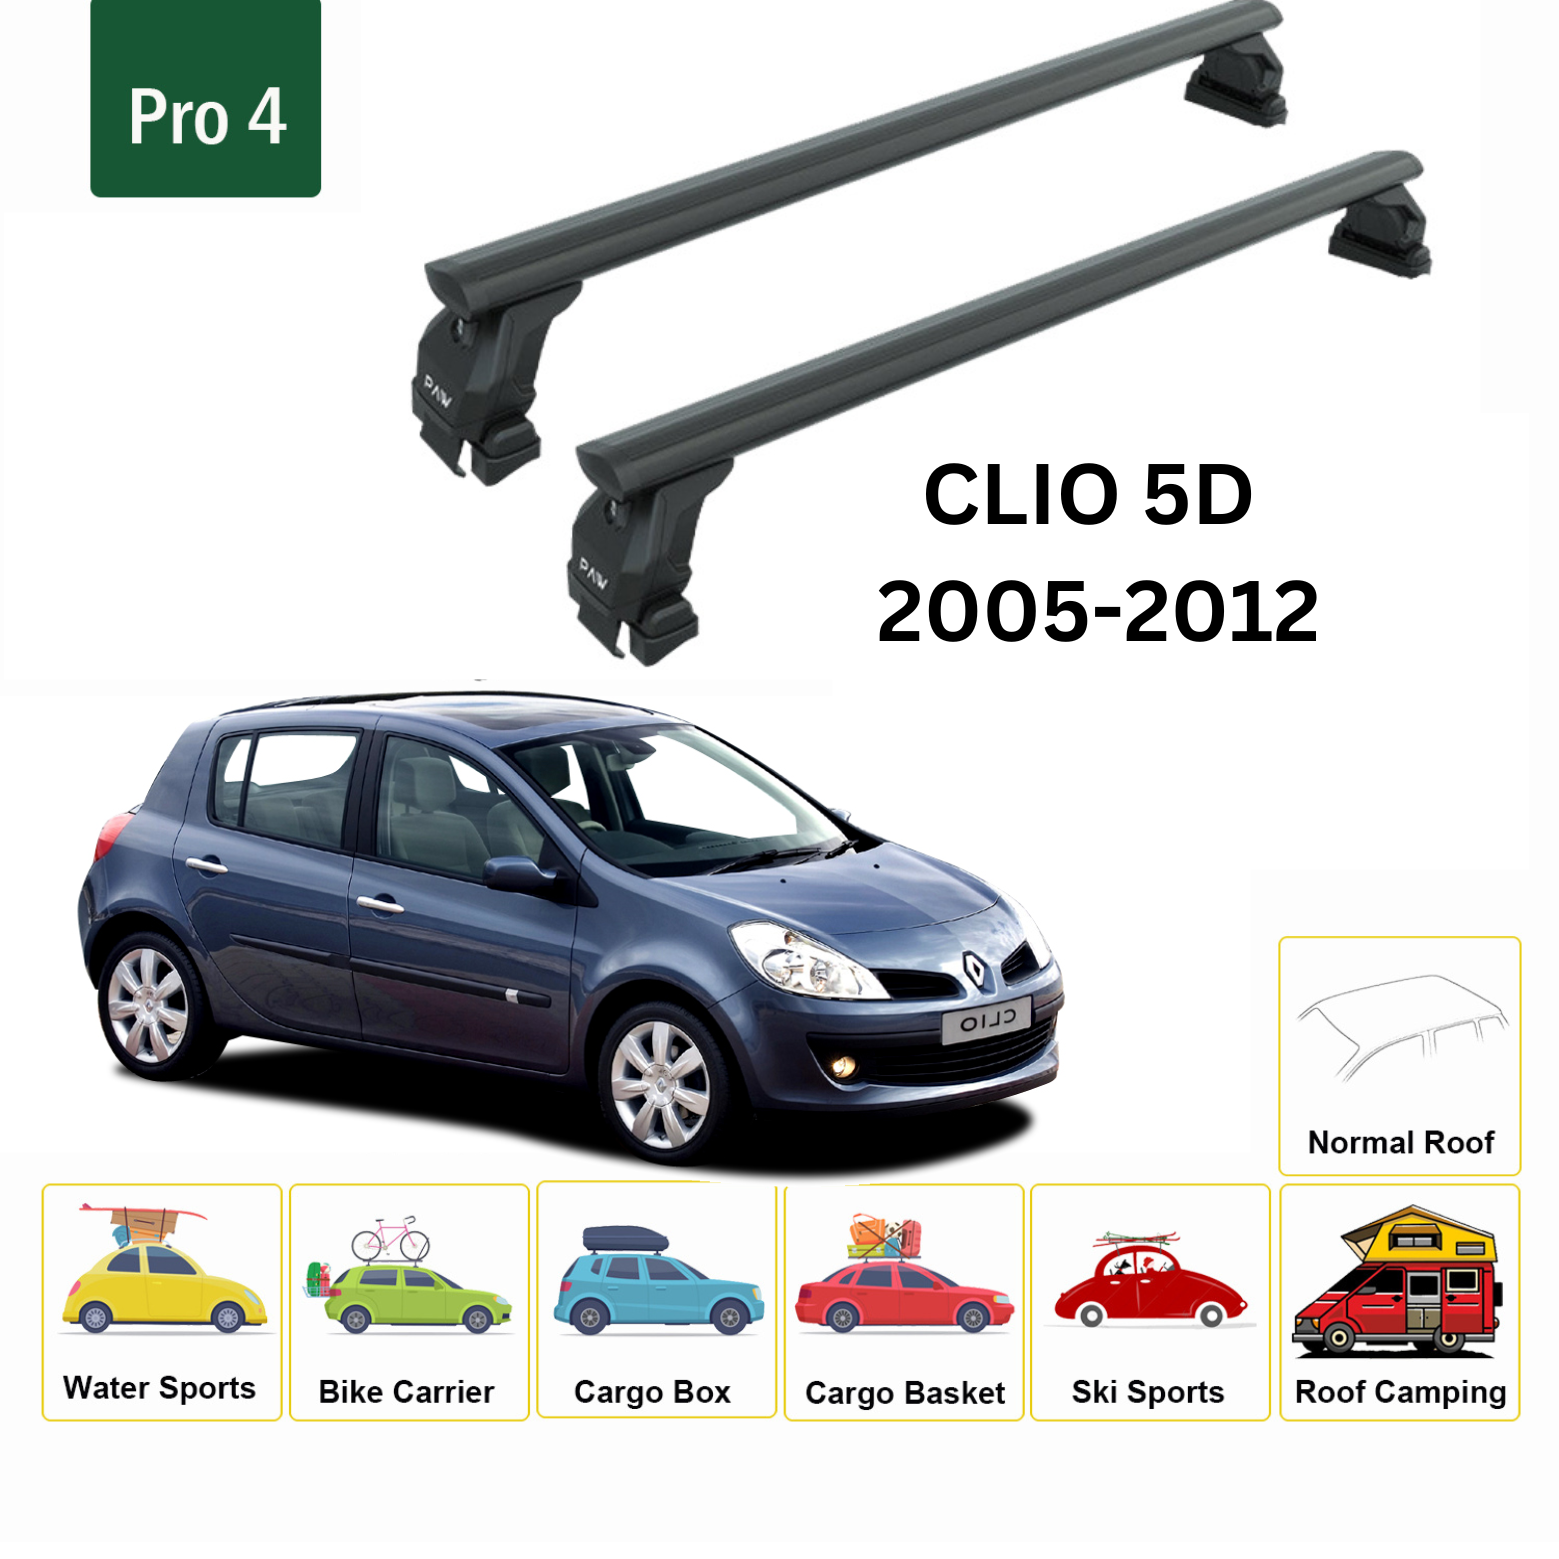 For Renault Clio 2005-2012 Roof Rack System, Aluminium Cross Bar, Metal Bracket, Normal Roof, Black - 0